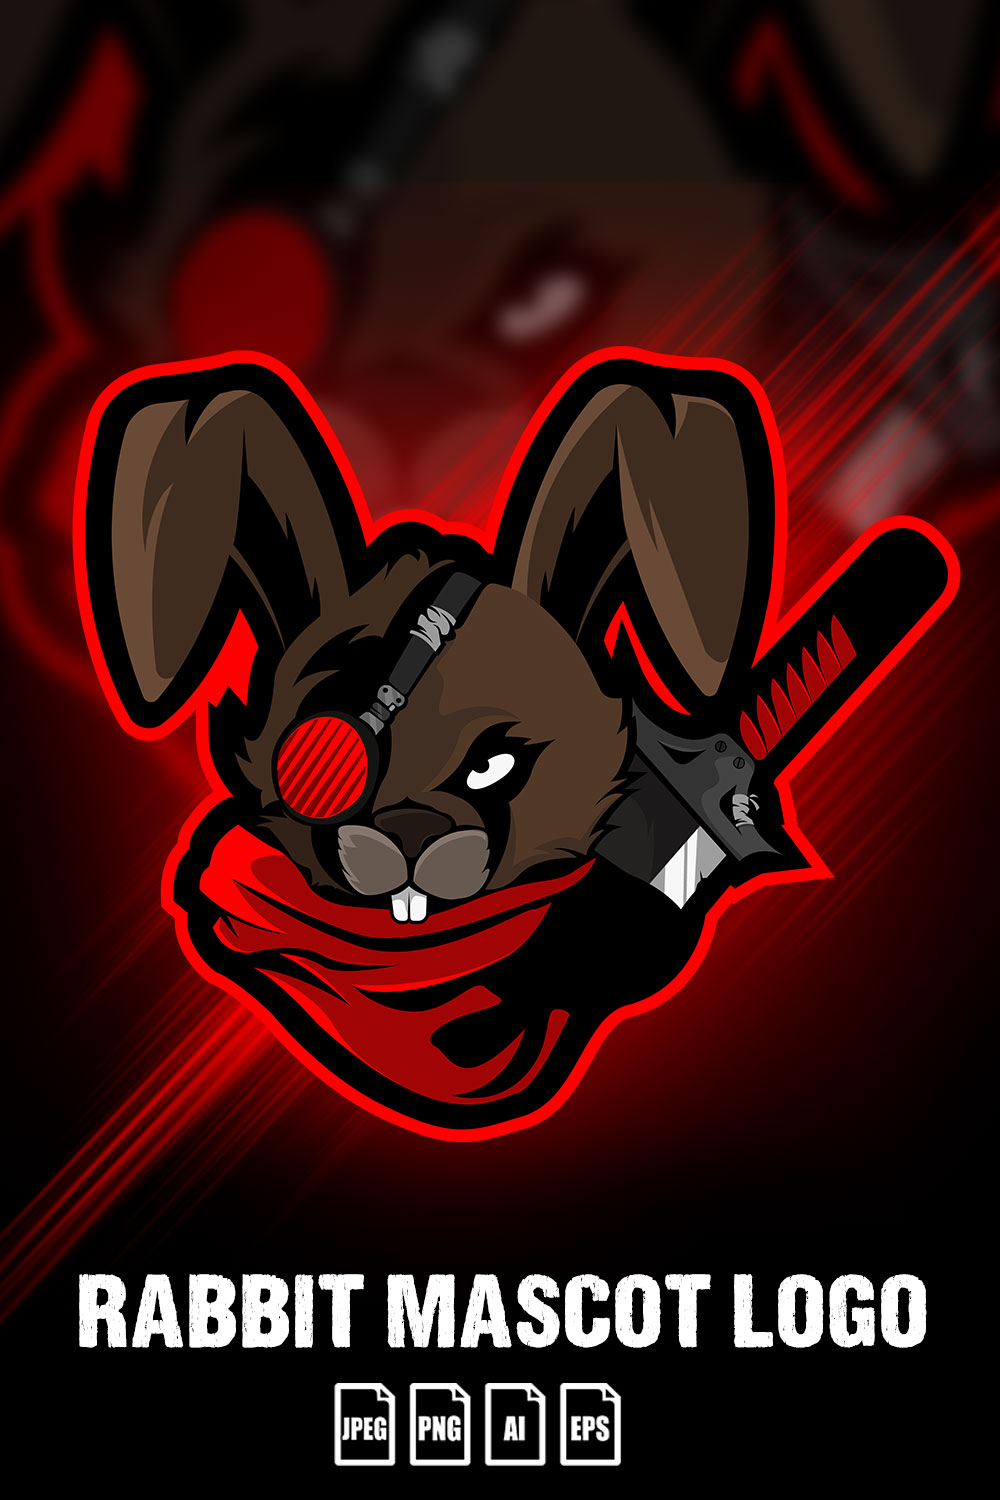 Ninja Rabbit Gaming logo for Esports Gamers & Streamers pinterest preview image.